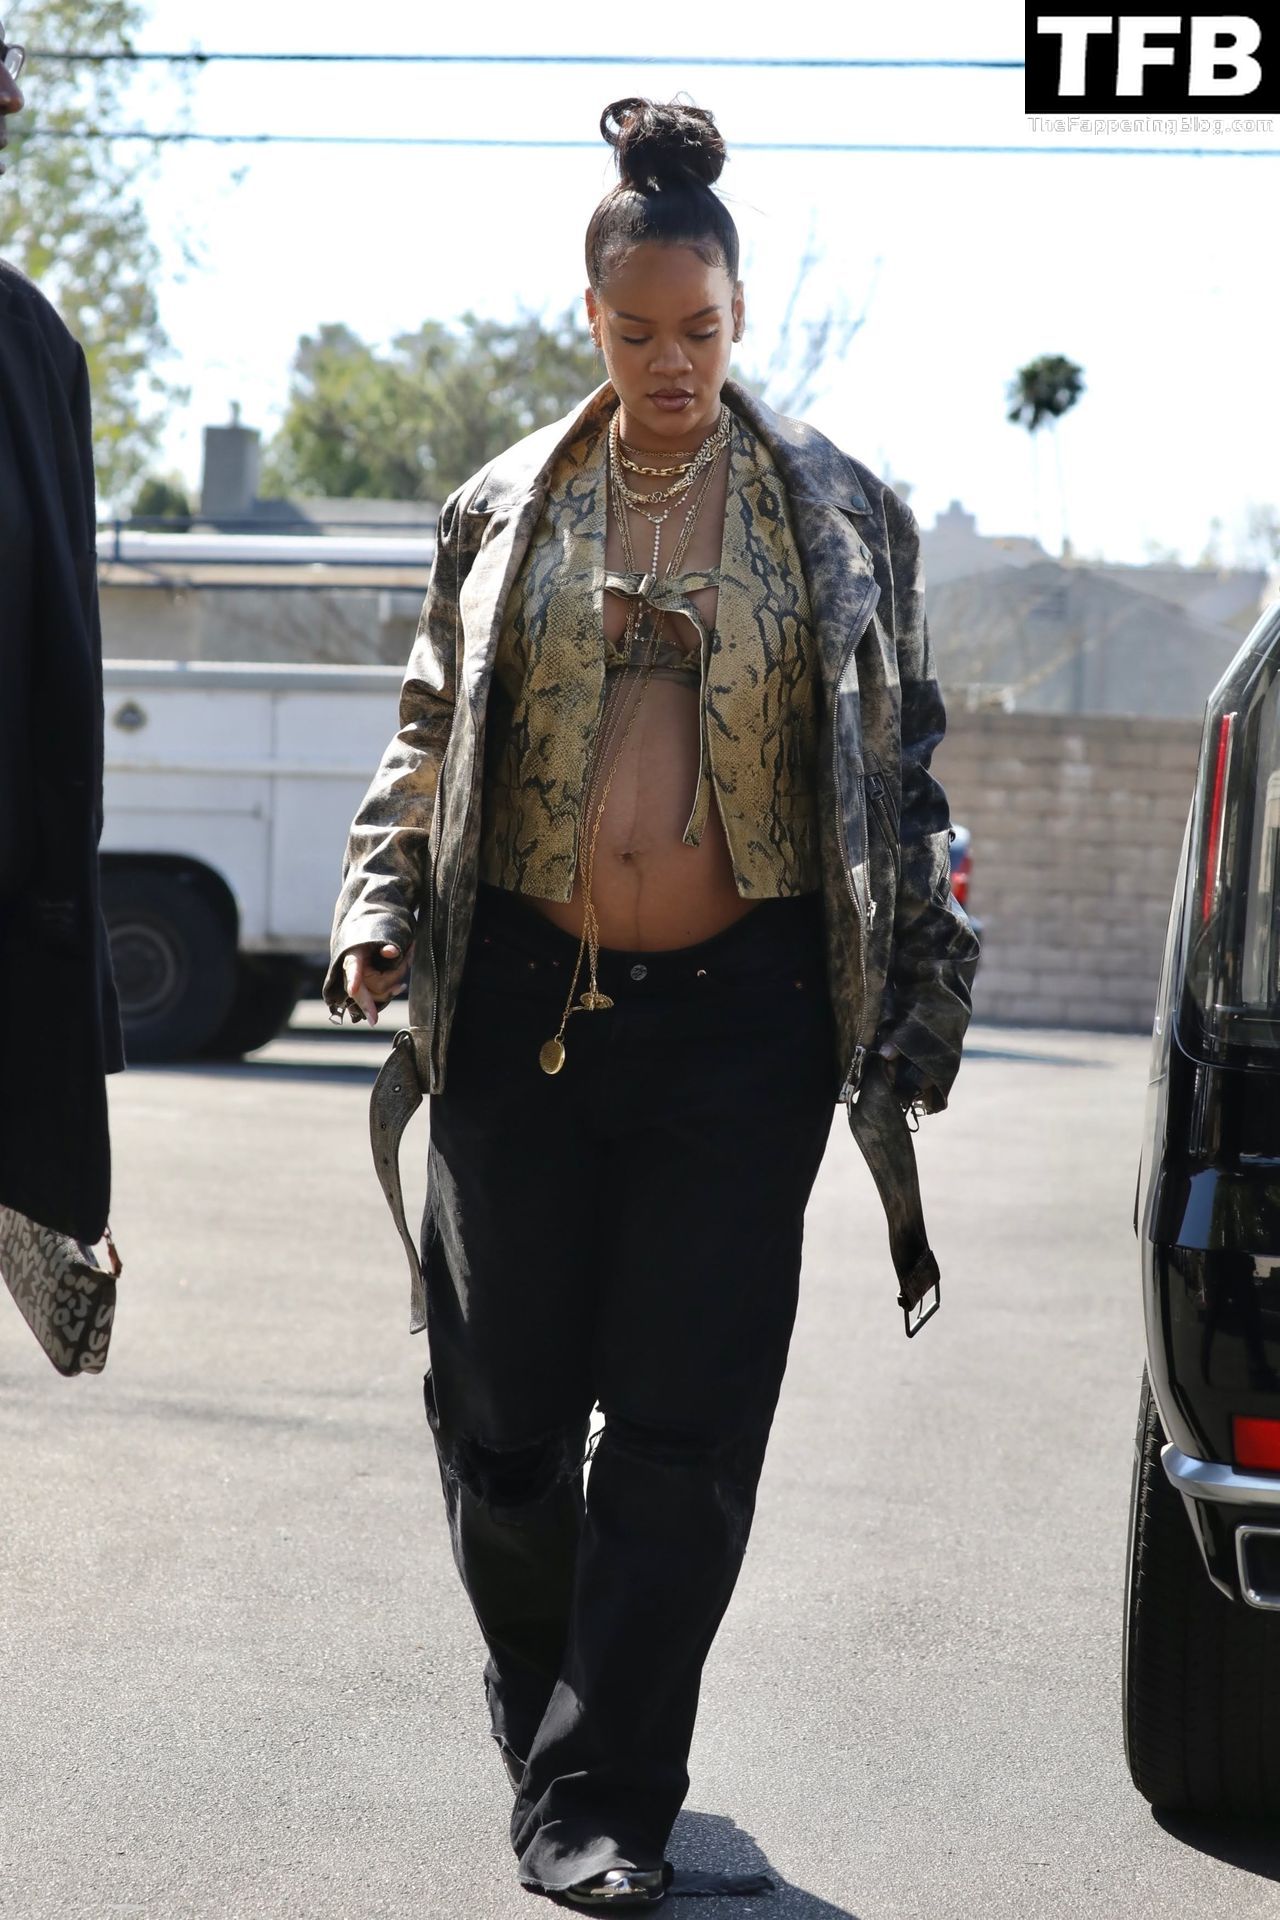 Rihanna-Sexy-The-Fappening-Blog-21-3.jpg